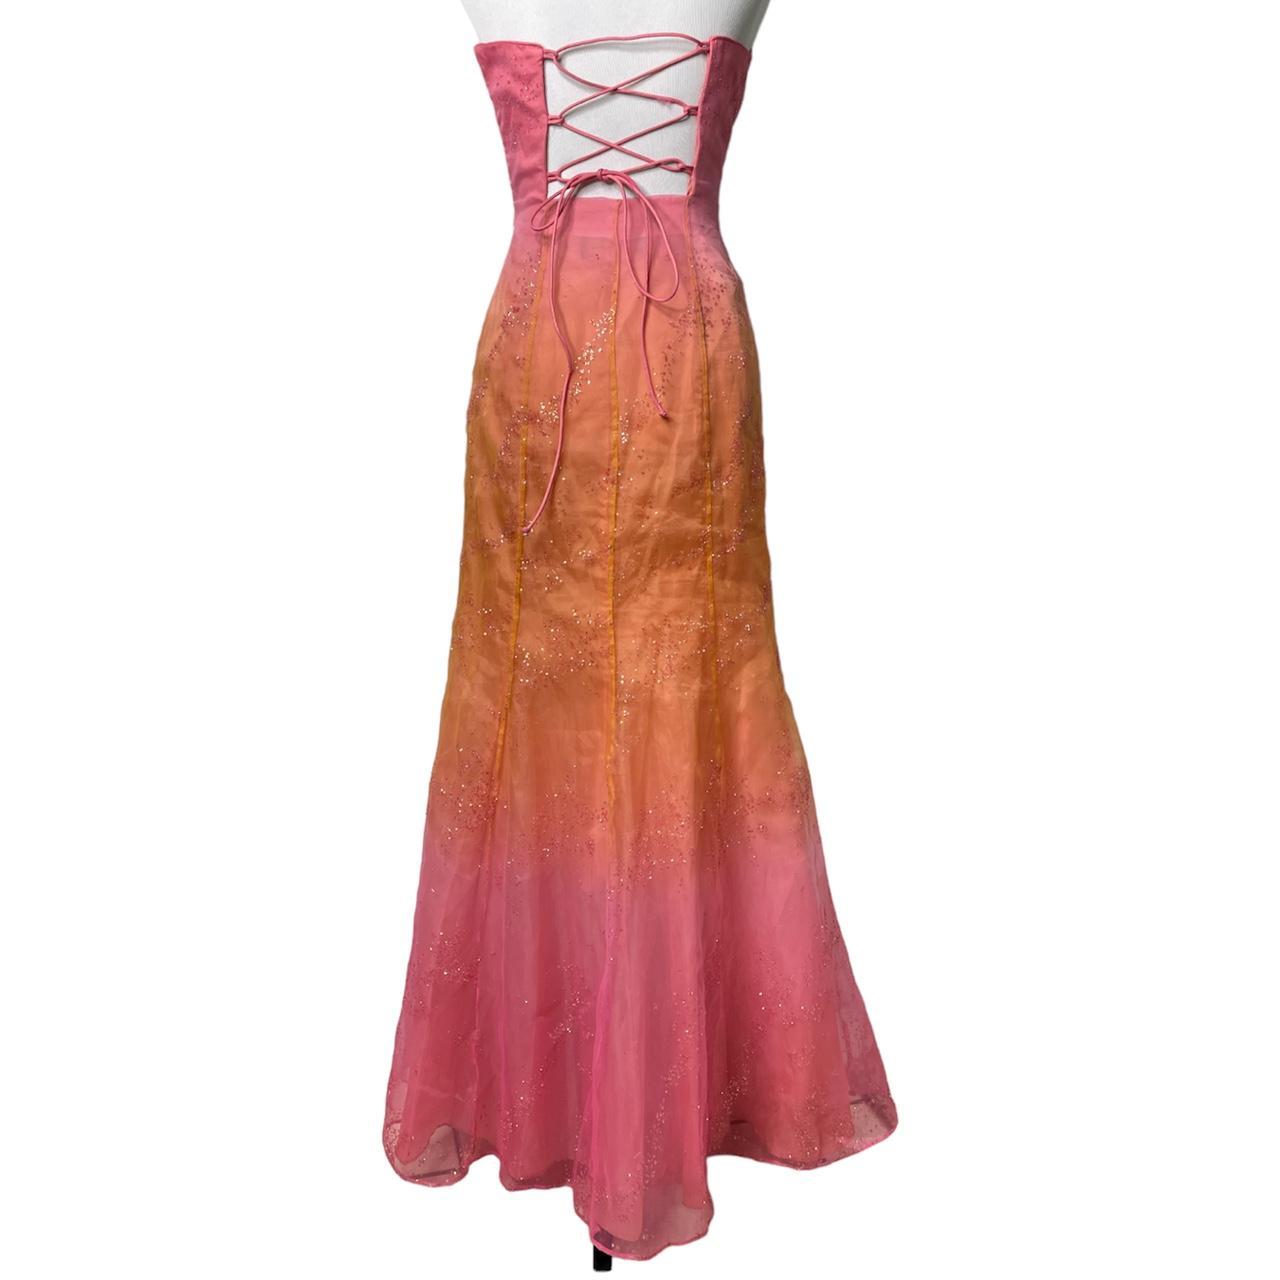 Gorman Women's Orange and Pink Dress (2)